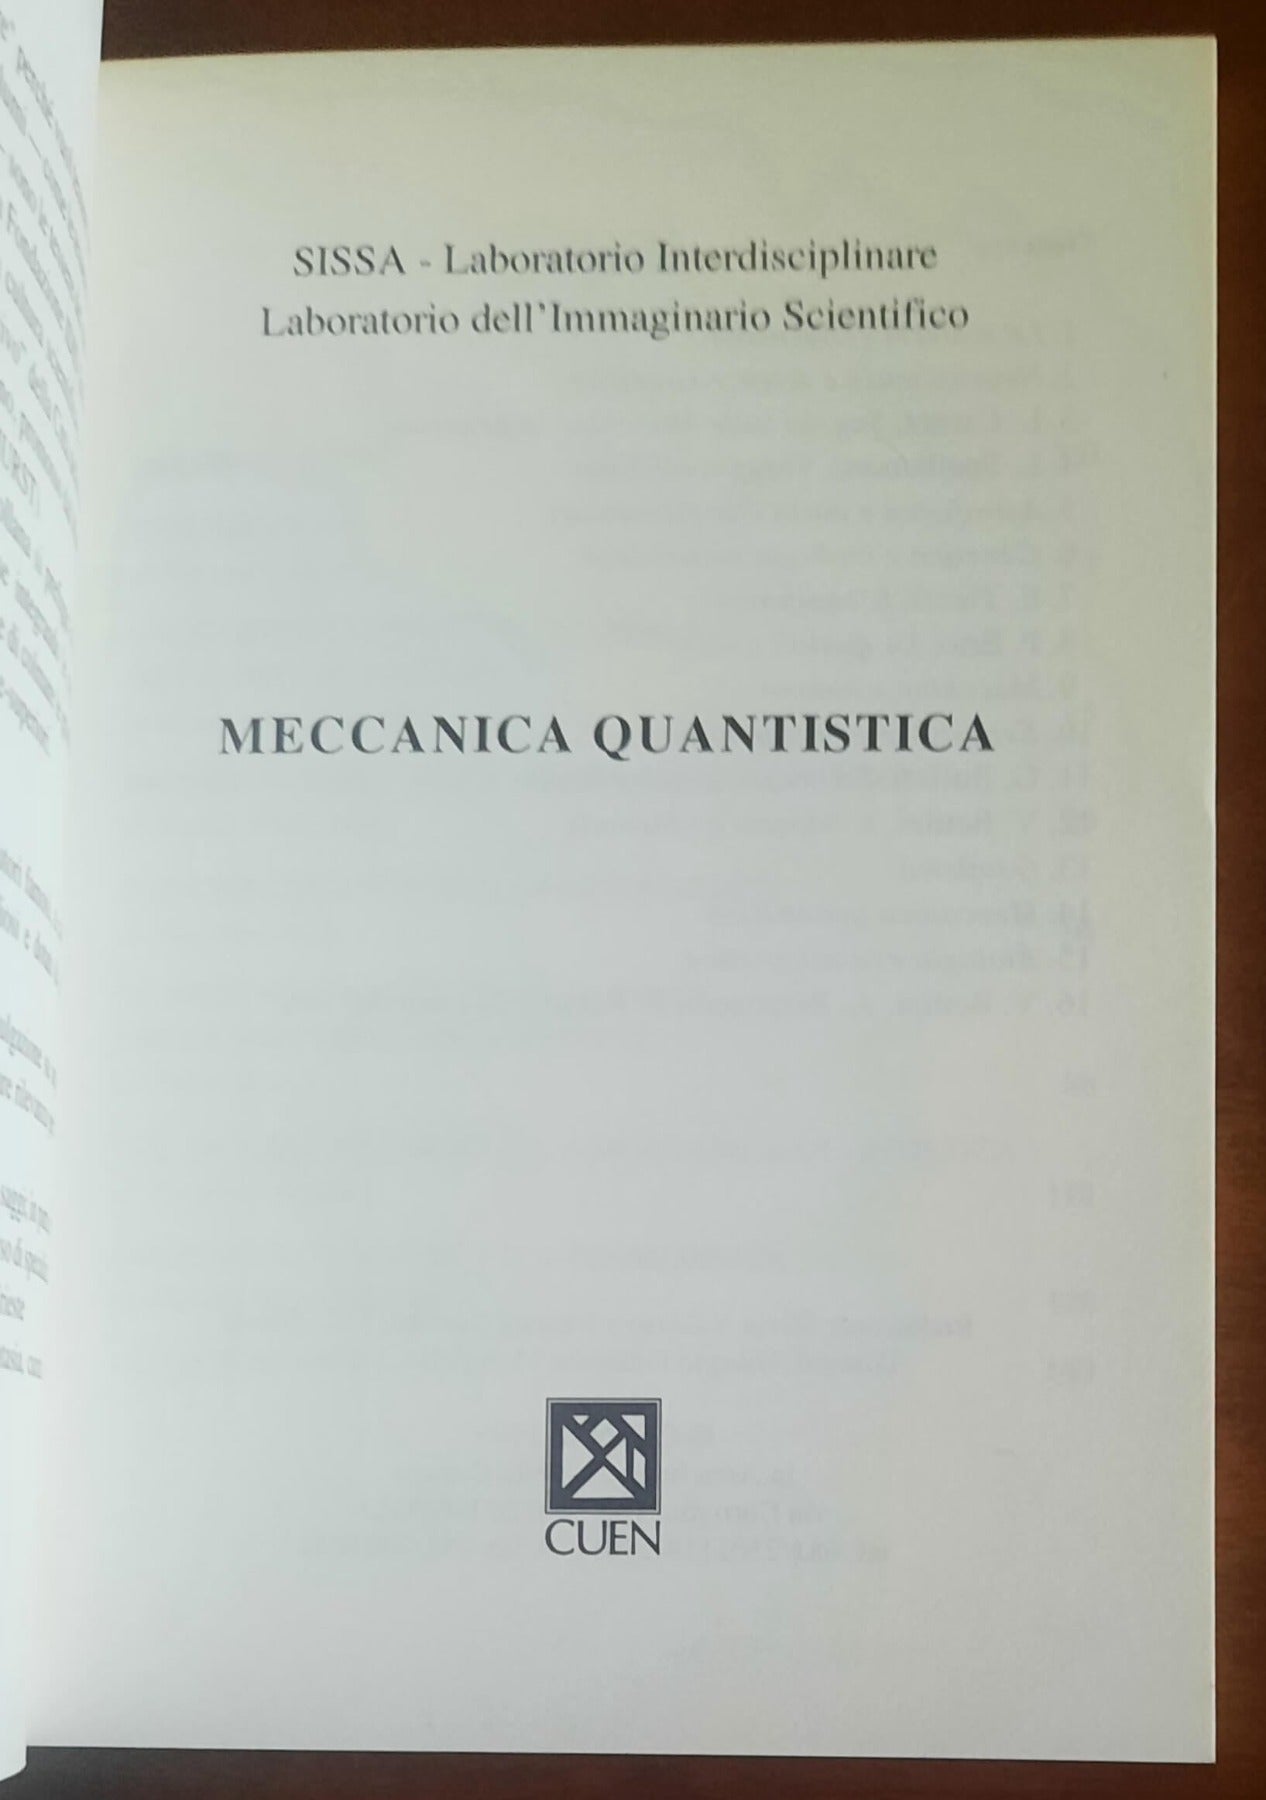 Meccanica quantistica - Tessere quaderni di divulgazione